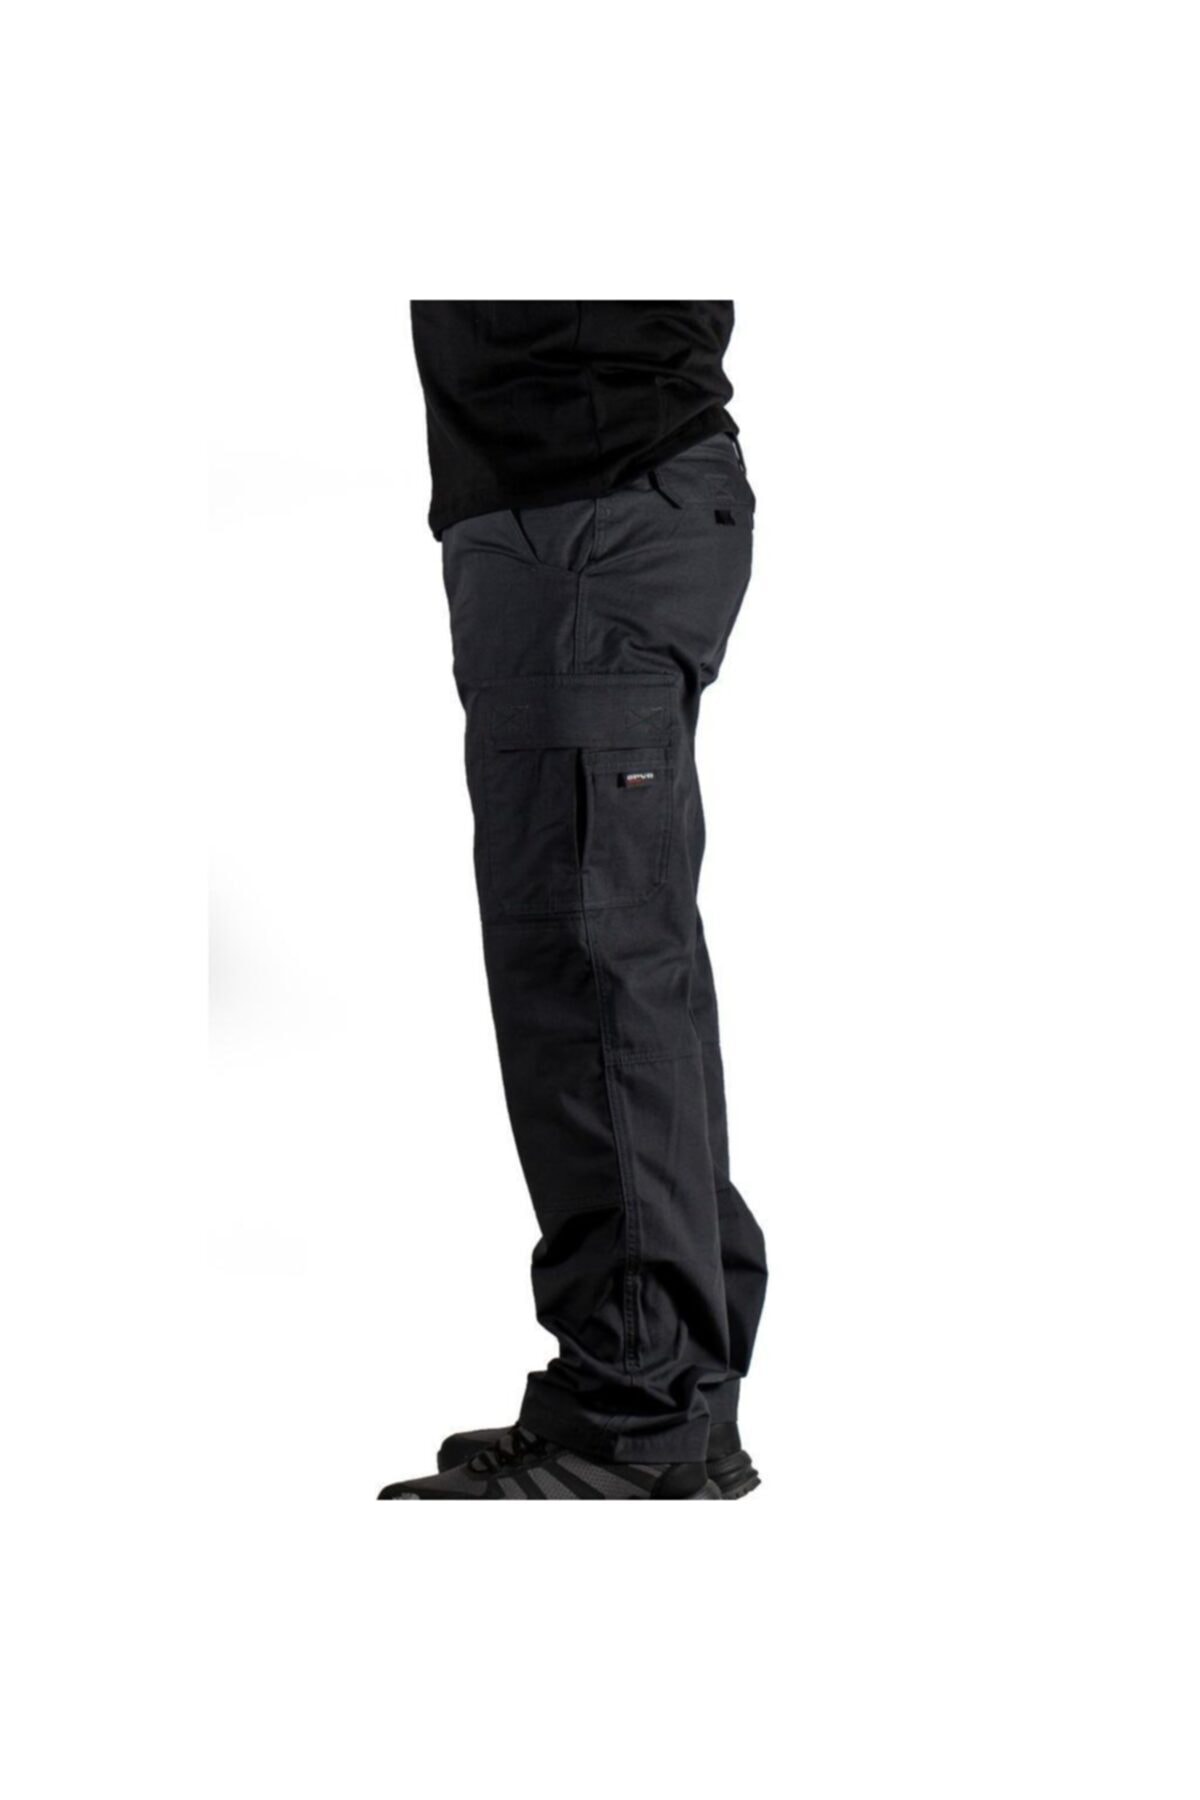 Silyon Askeri Giyim Taktik Pantolon 4 Mevsim Giyilebilir Taktikal Pantolon Tactical Pantolon